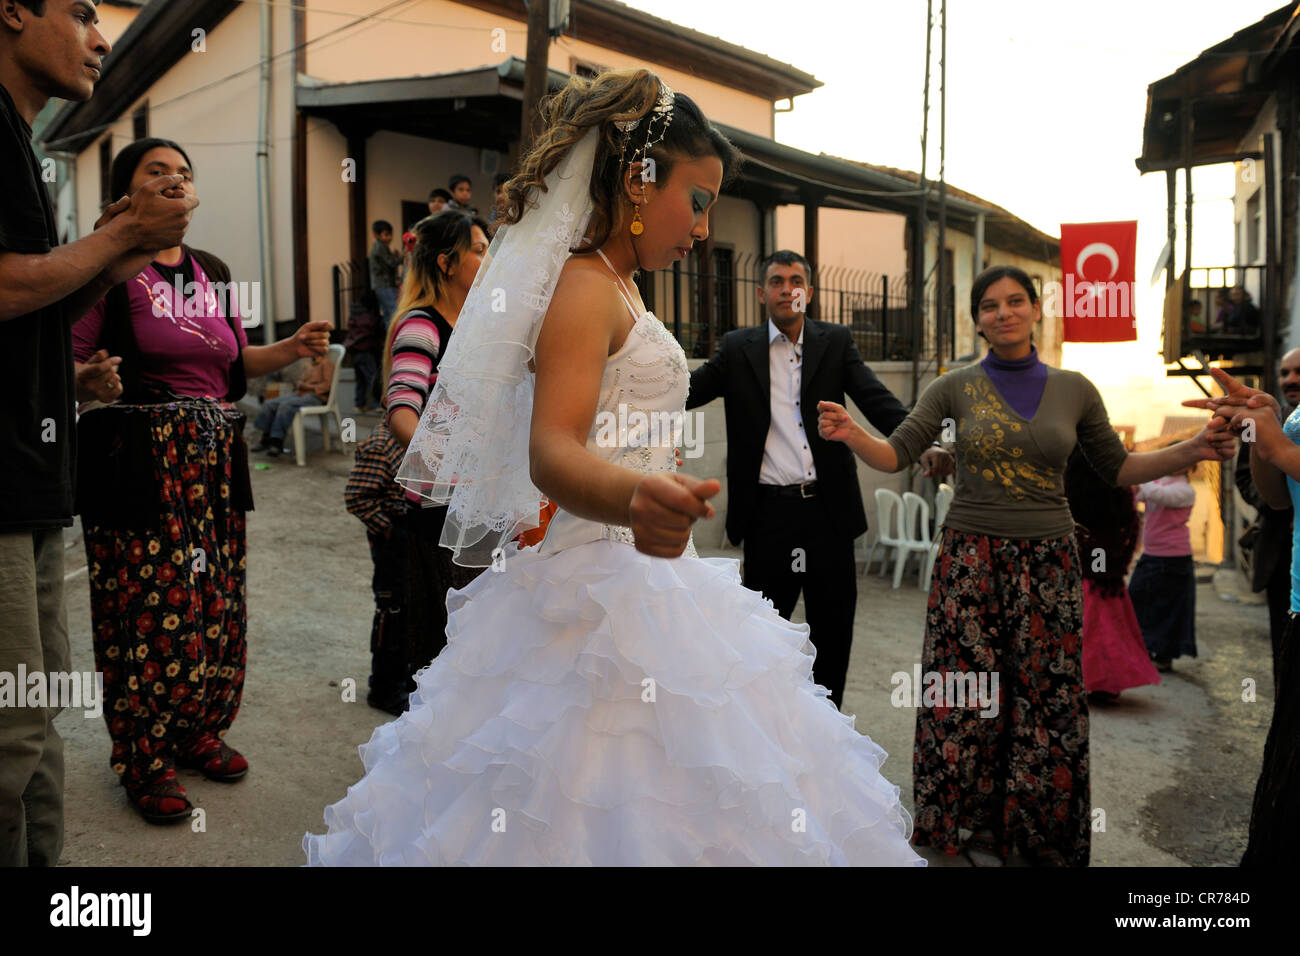 Turkey, Central Anatolia, Ankara, citadel in the old town, Gypsy wedding in the street Stock Photo